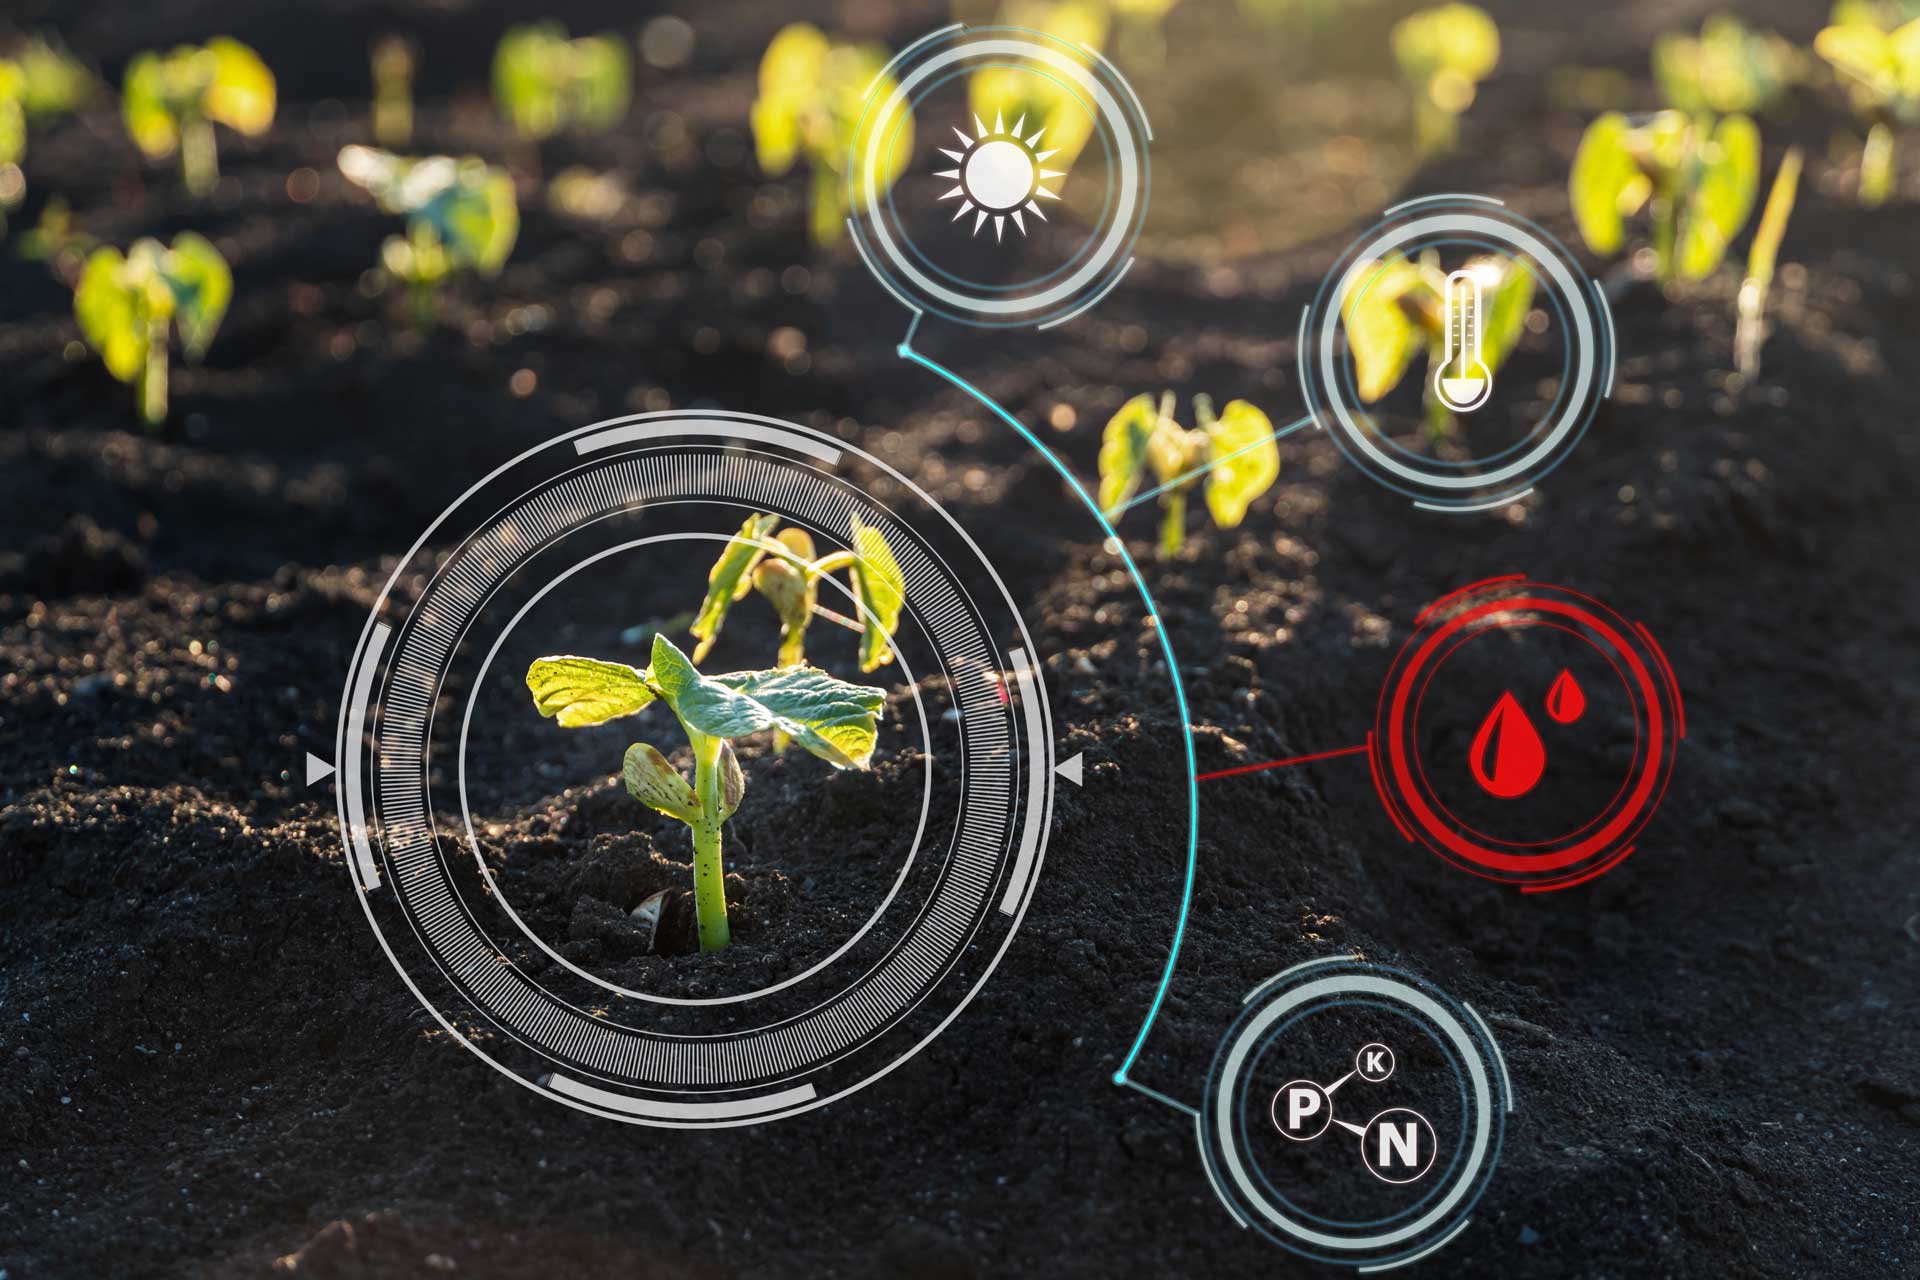 Greenlight Analytical - Precision farming